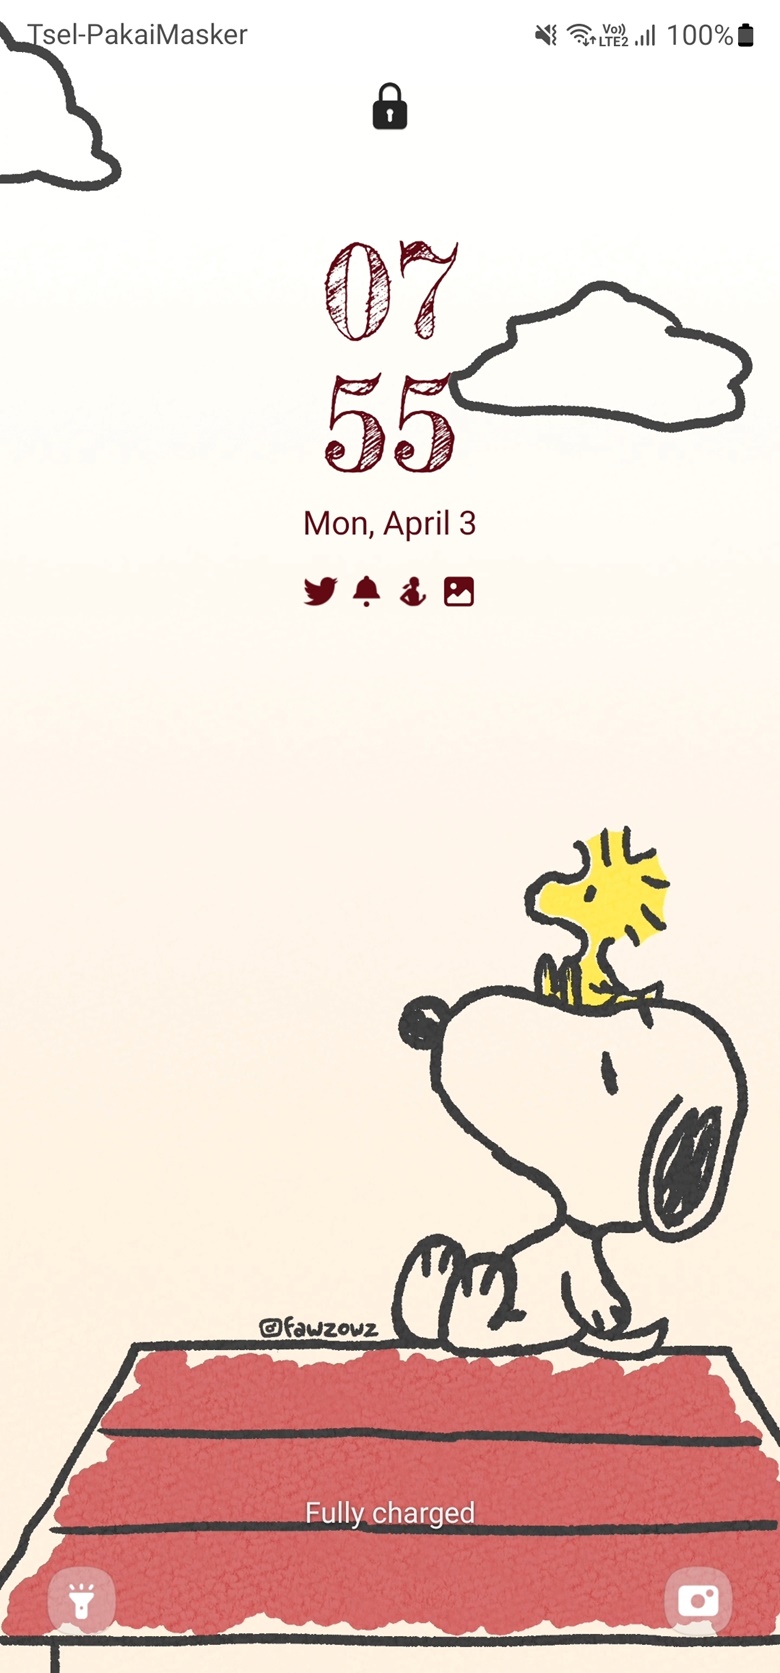 Snoopy Wallpaper